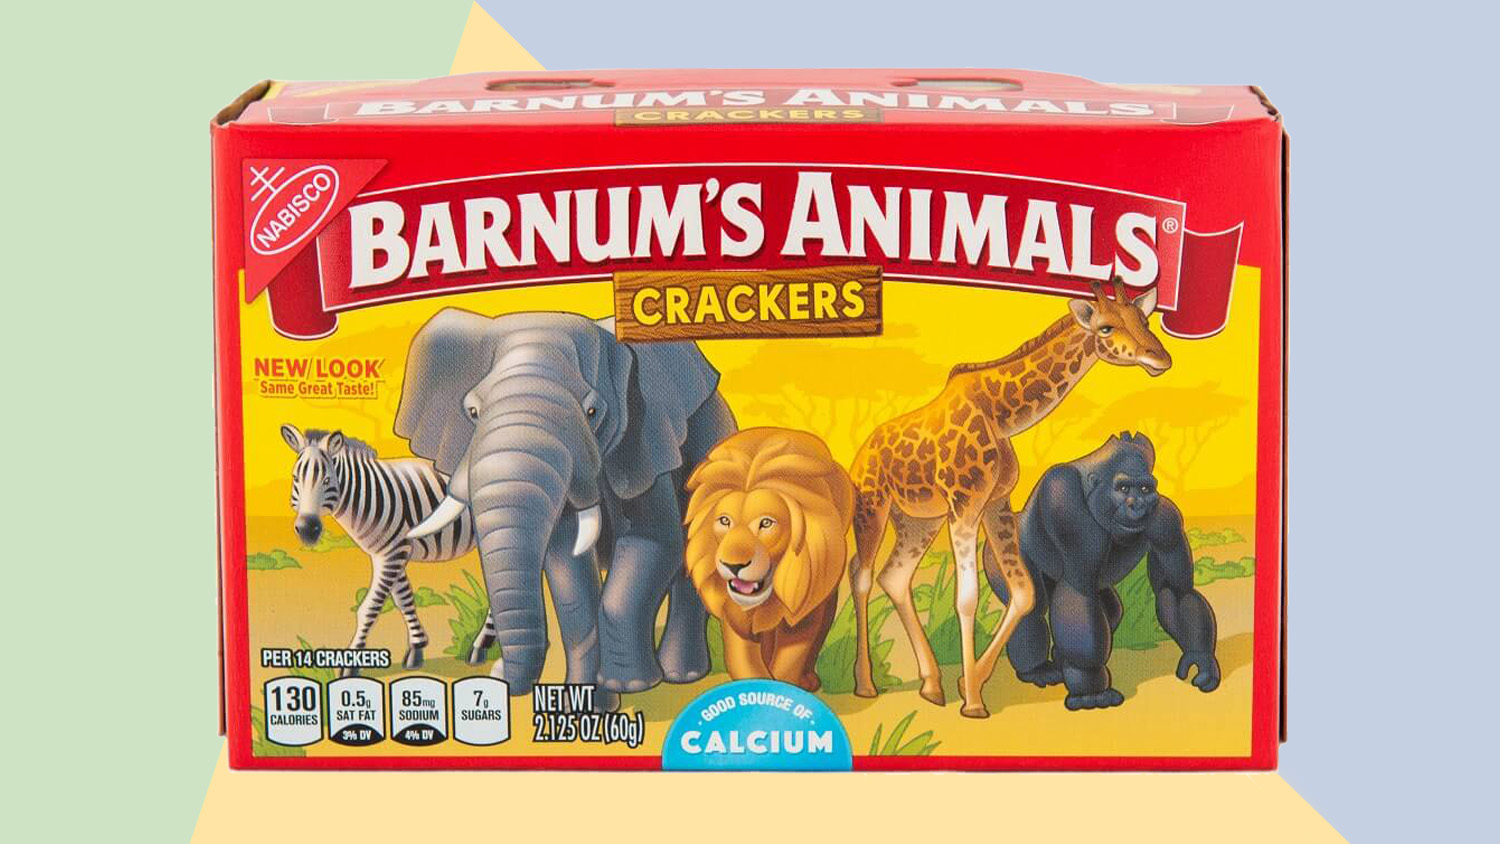 Nabisco’s Barnum's Vegan Animal Crackers Finally Free After 116 Years Behind Bars